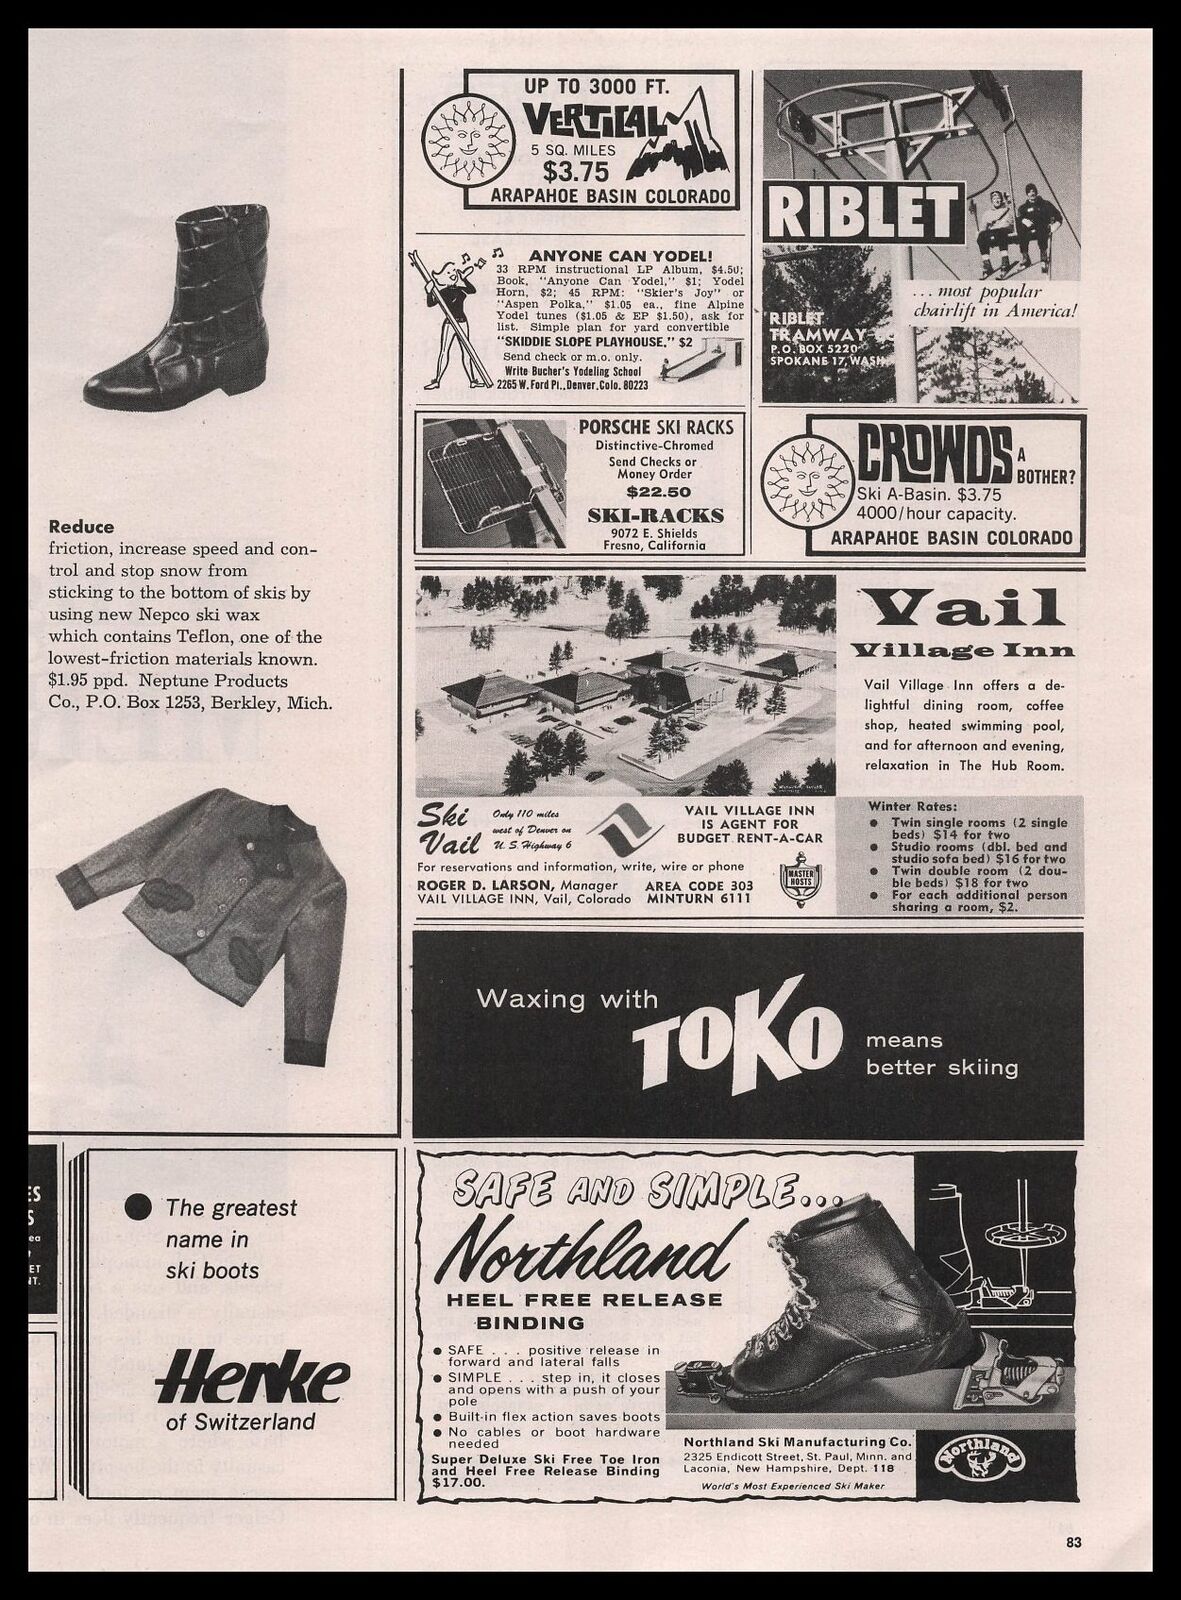 1964 Porsche Chromed Snow Ski Racks $22.50 Fresno California Vintage Print Ad